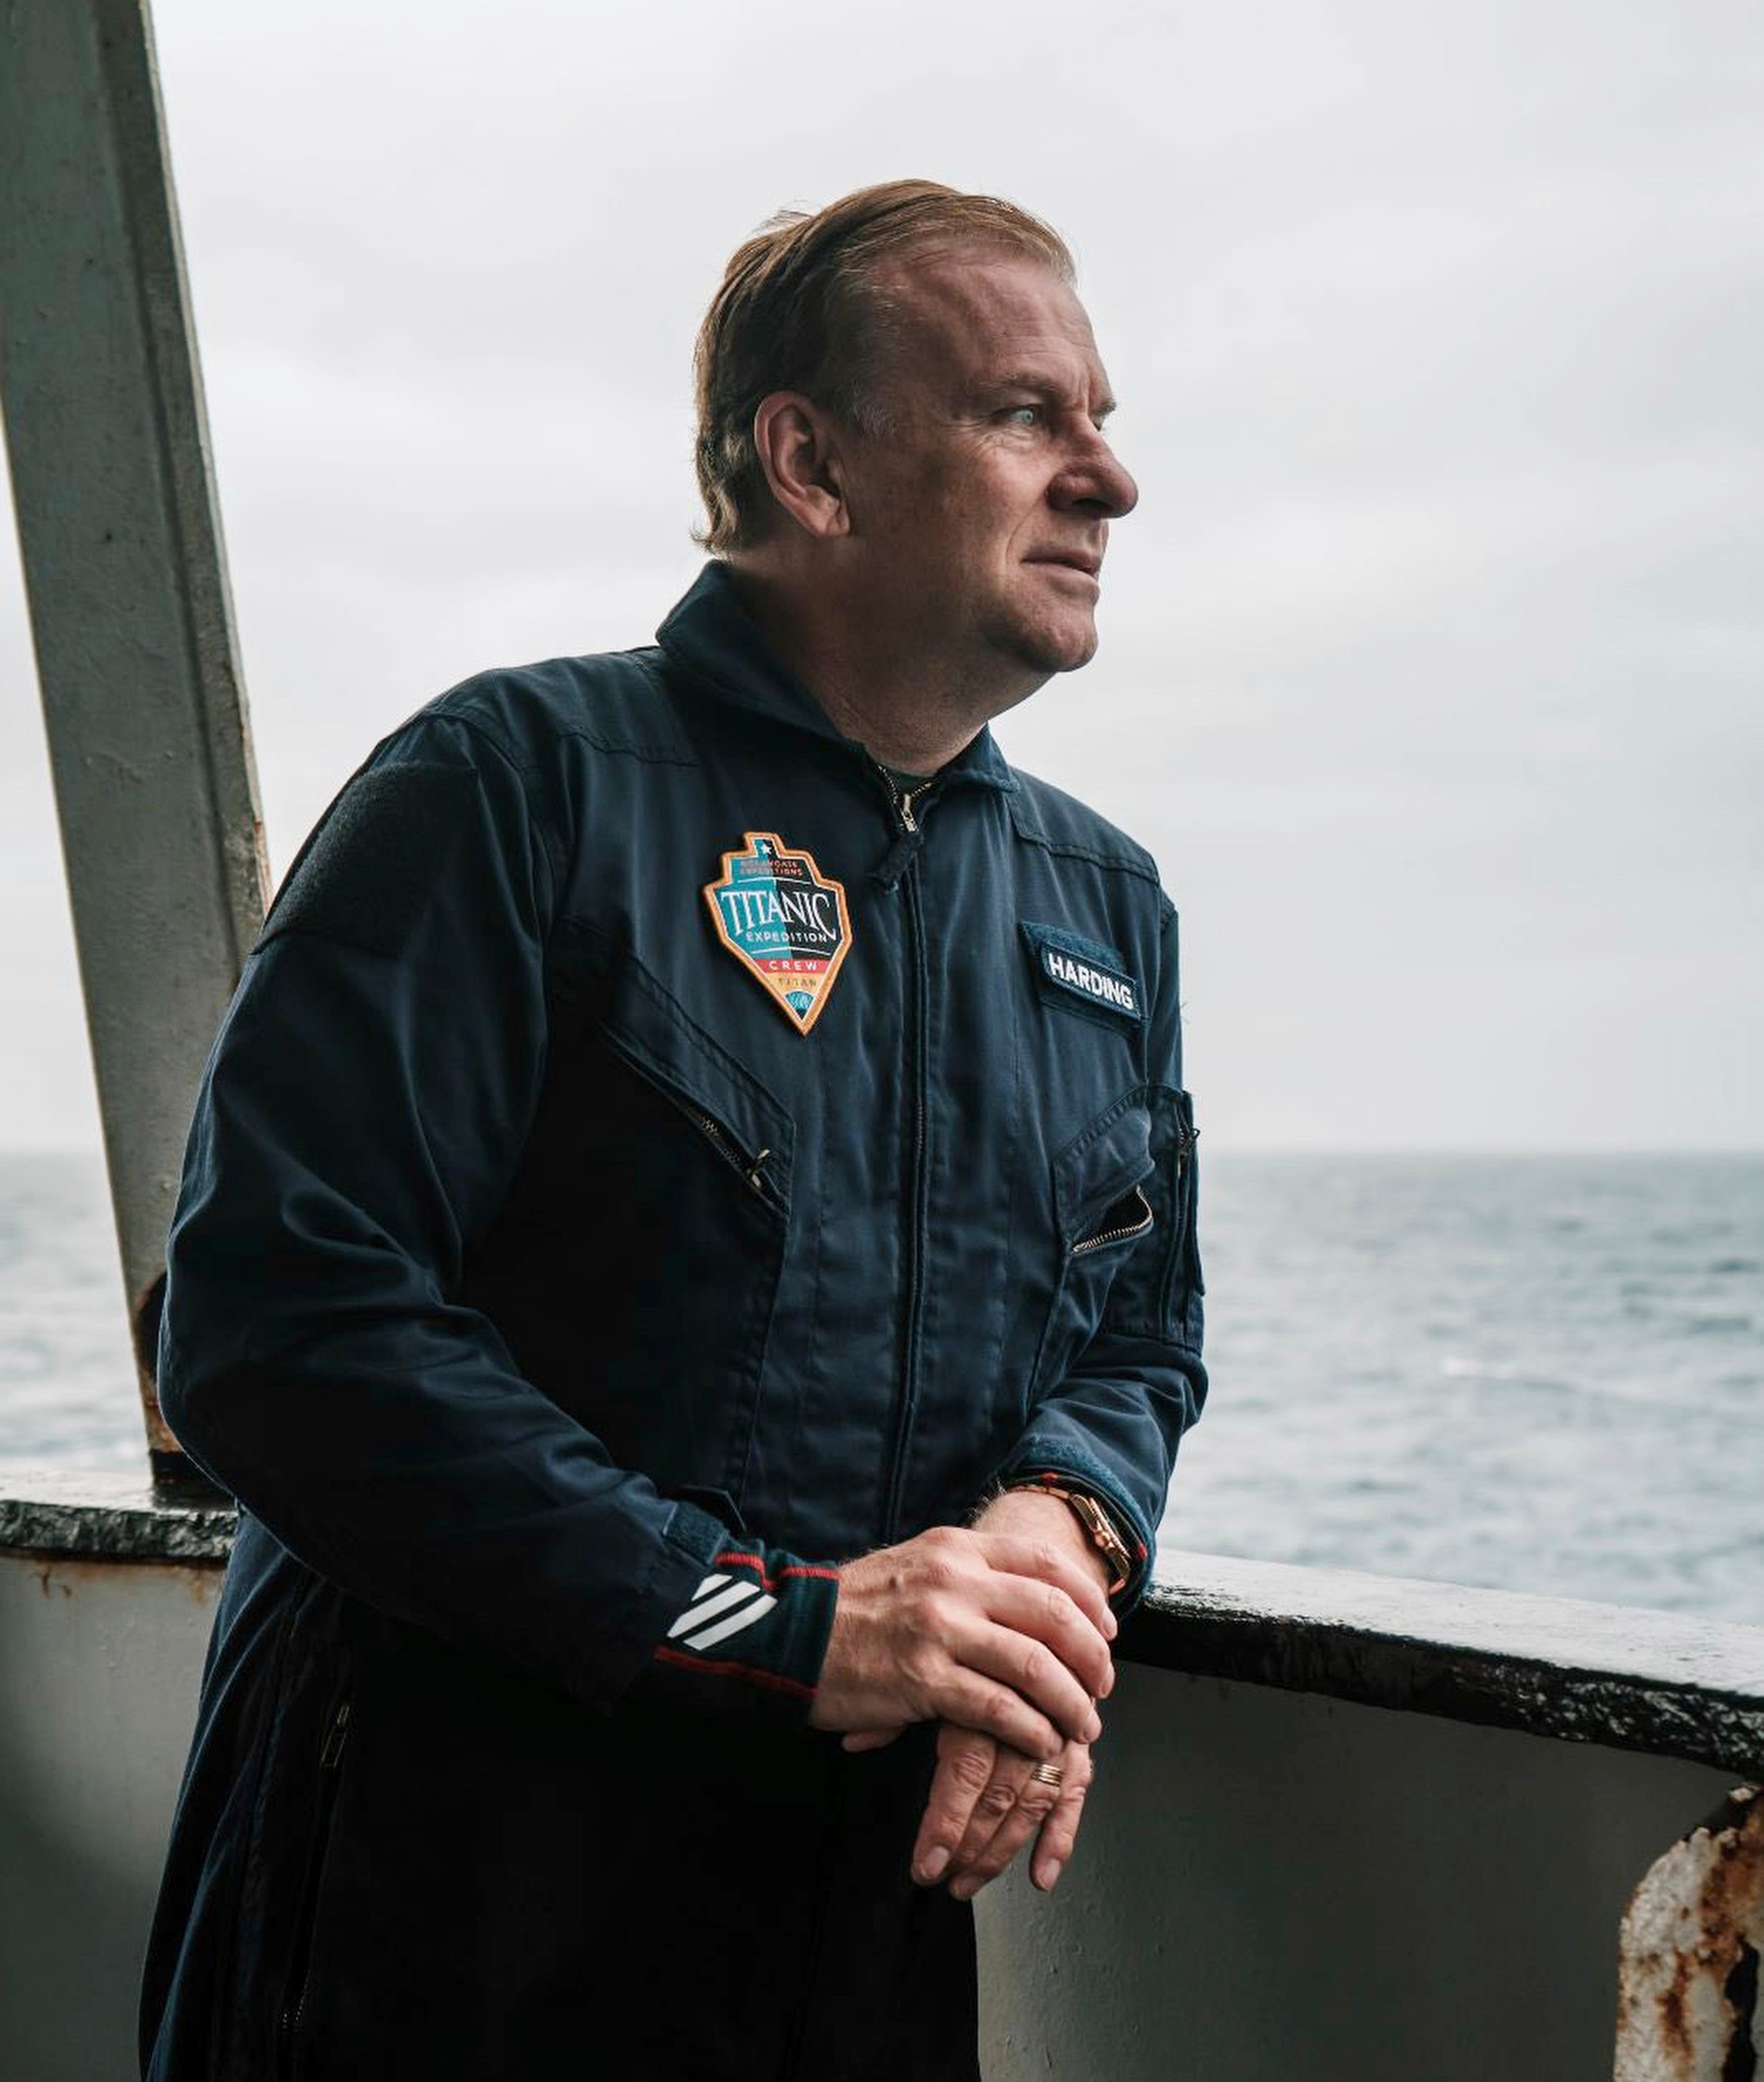 US Coast Guard: Oxygen supplies on the American bathyscaphe Titan